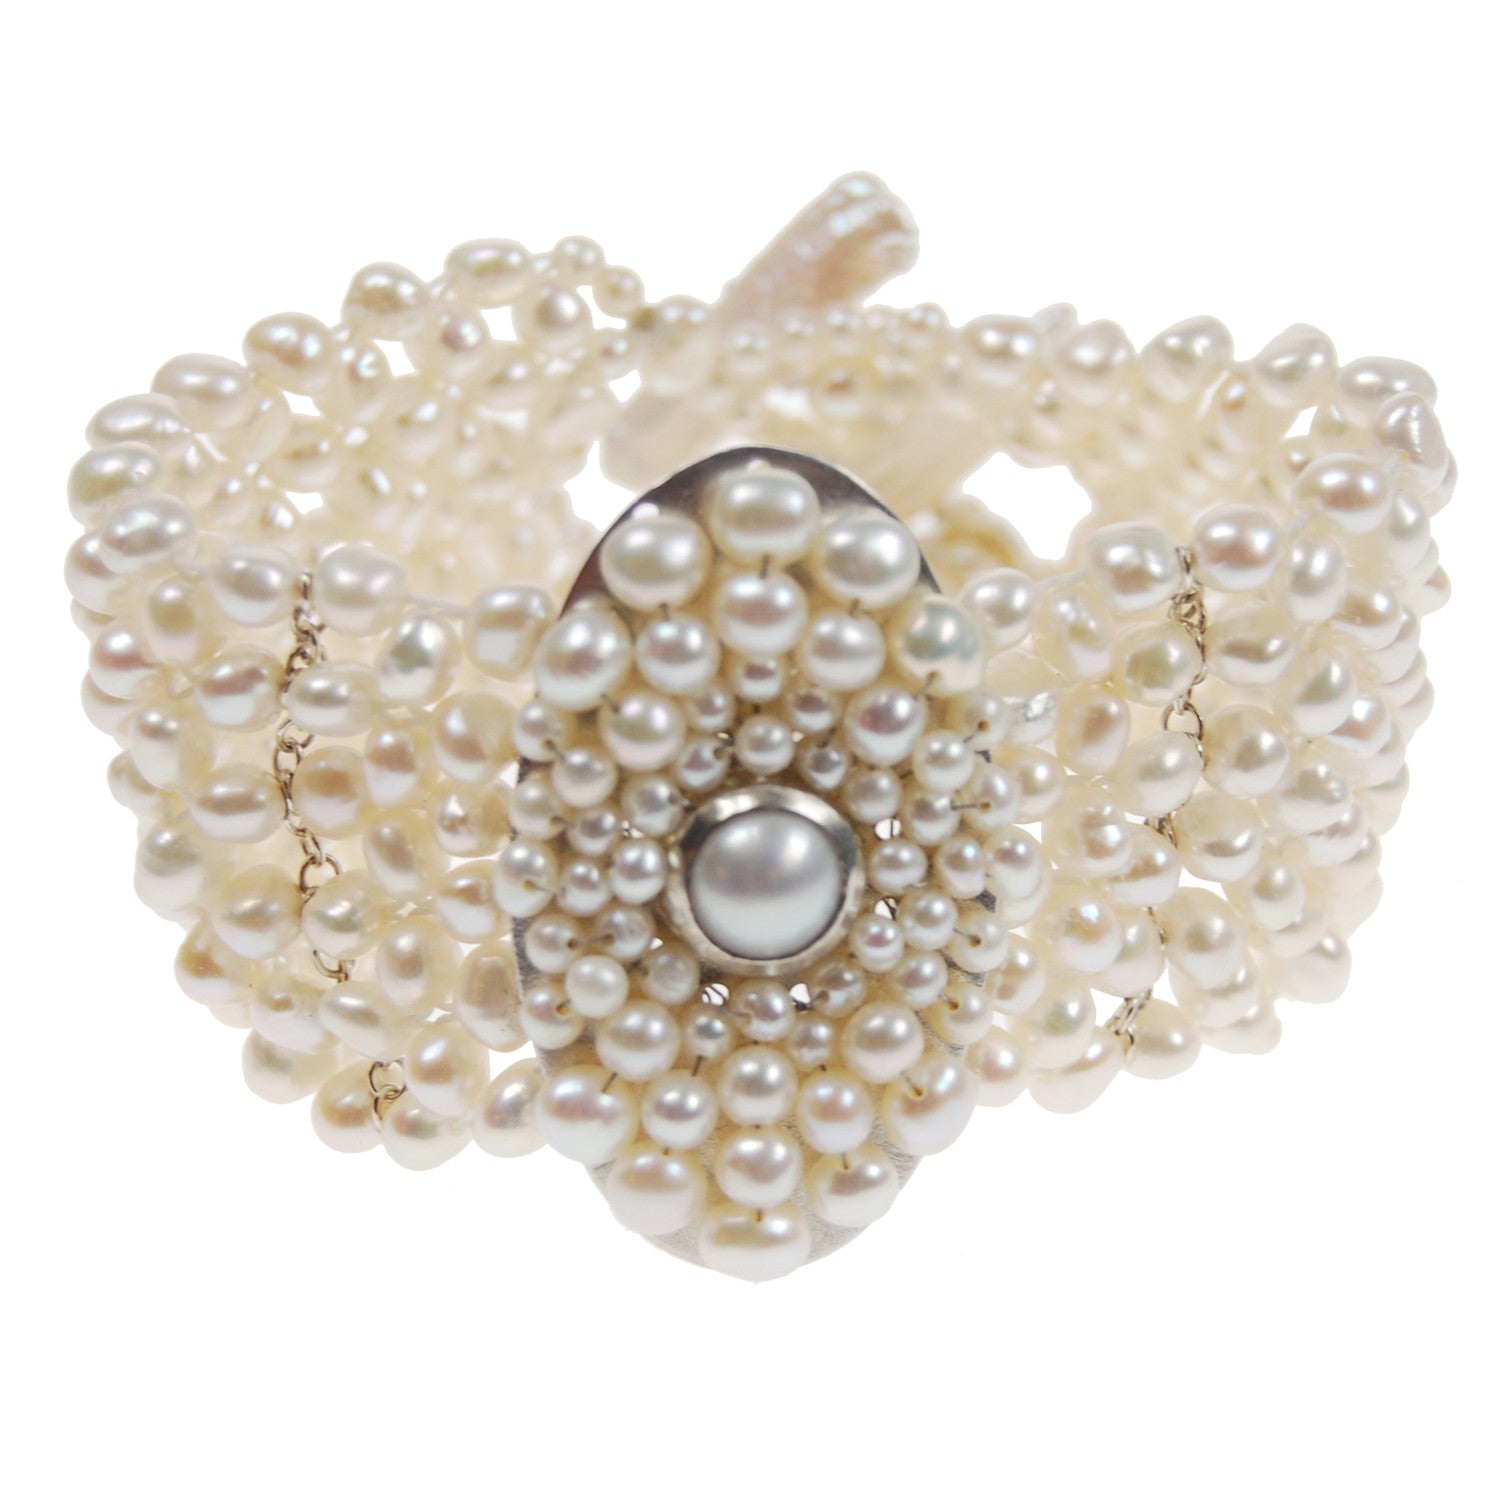 Pearl Bracelet with Oval Centerpiece